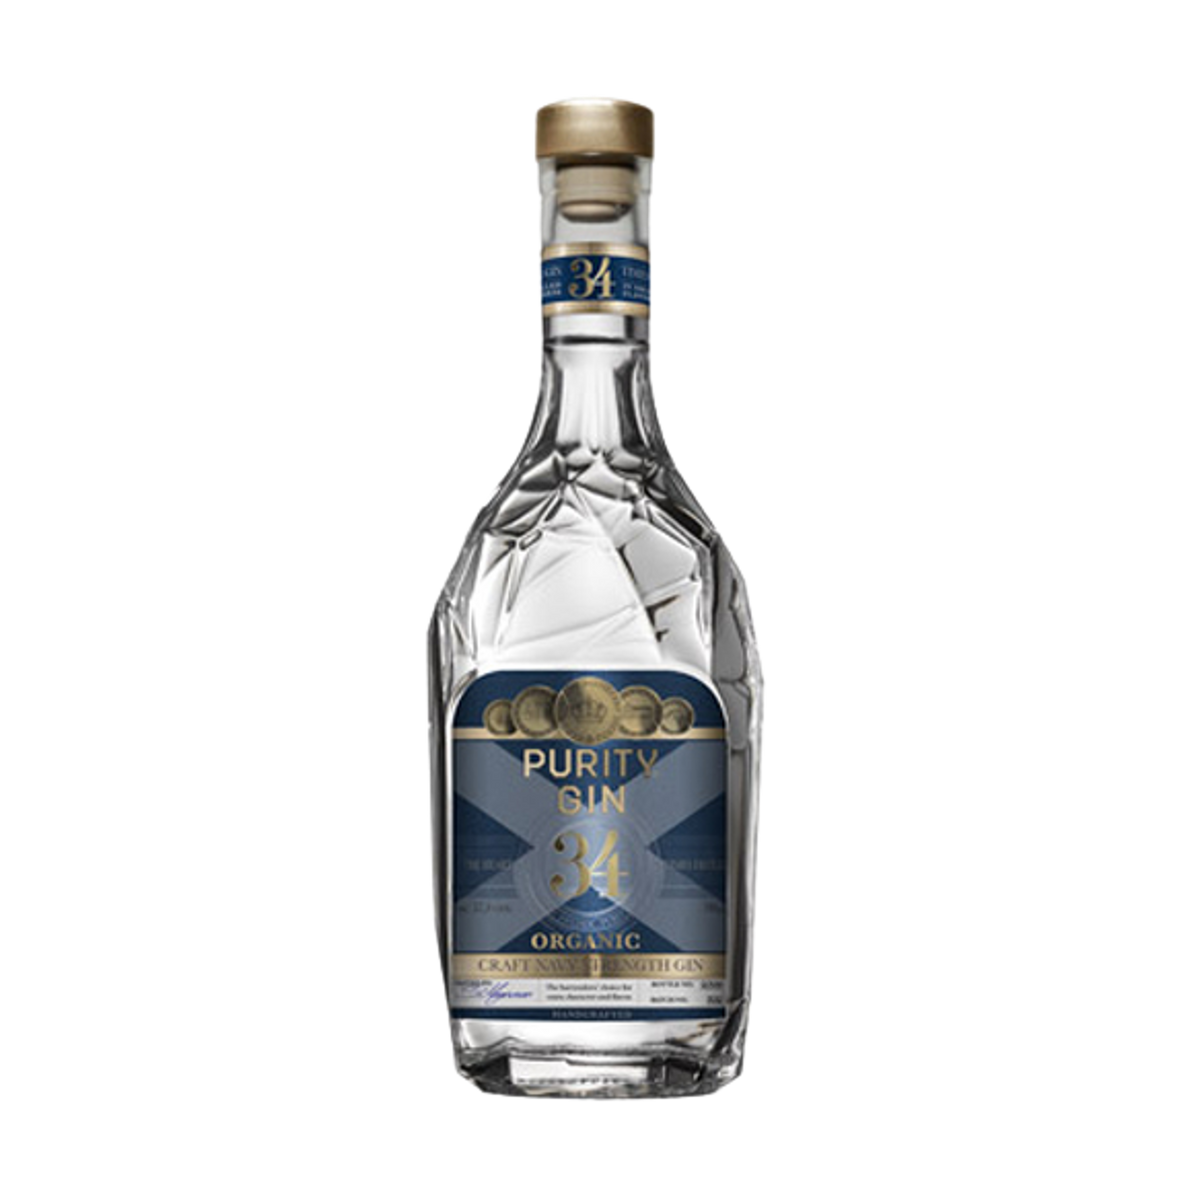 Purity 34 Navy Strength Organic Gin (750ml)